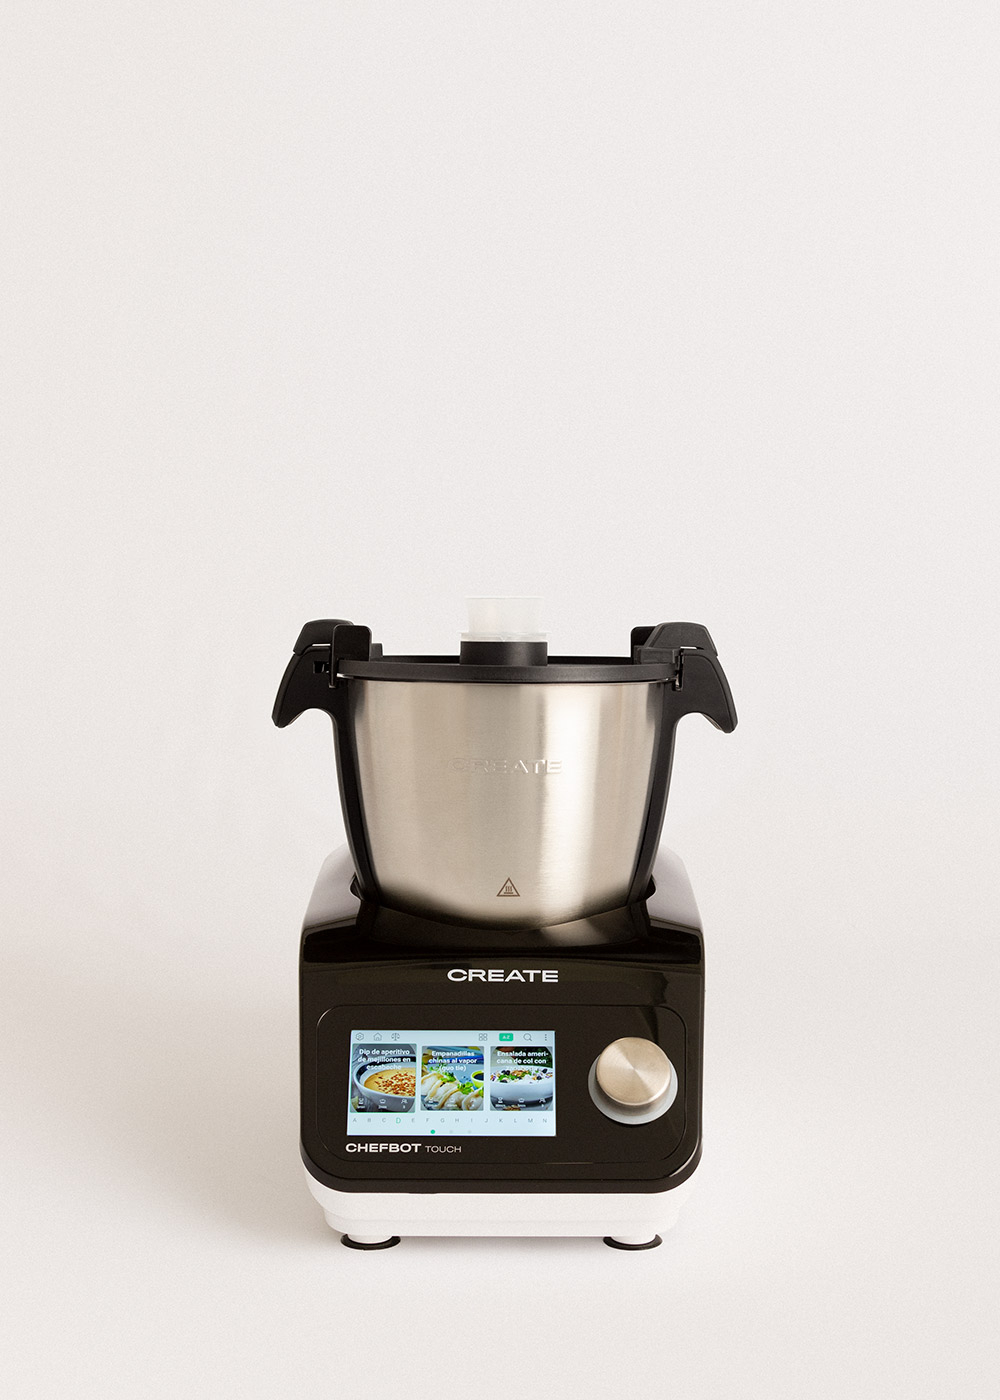  ChefRobot Robot procesador de alimentos de cocina, cocina  inteligente todo en uno, picadora, vapor, exprimidor, licuadora, hervir,  amasar, pesar, autolimpieza multifuncional con recetas guiadas, WiFi  integrado, control de aplicación (CR-5) 